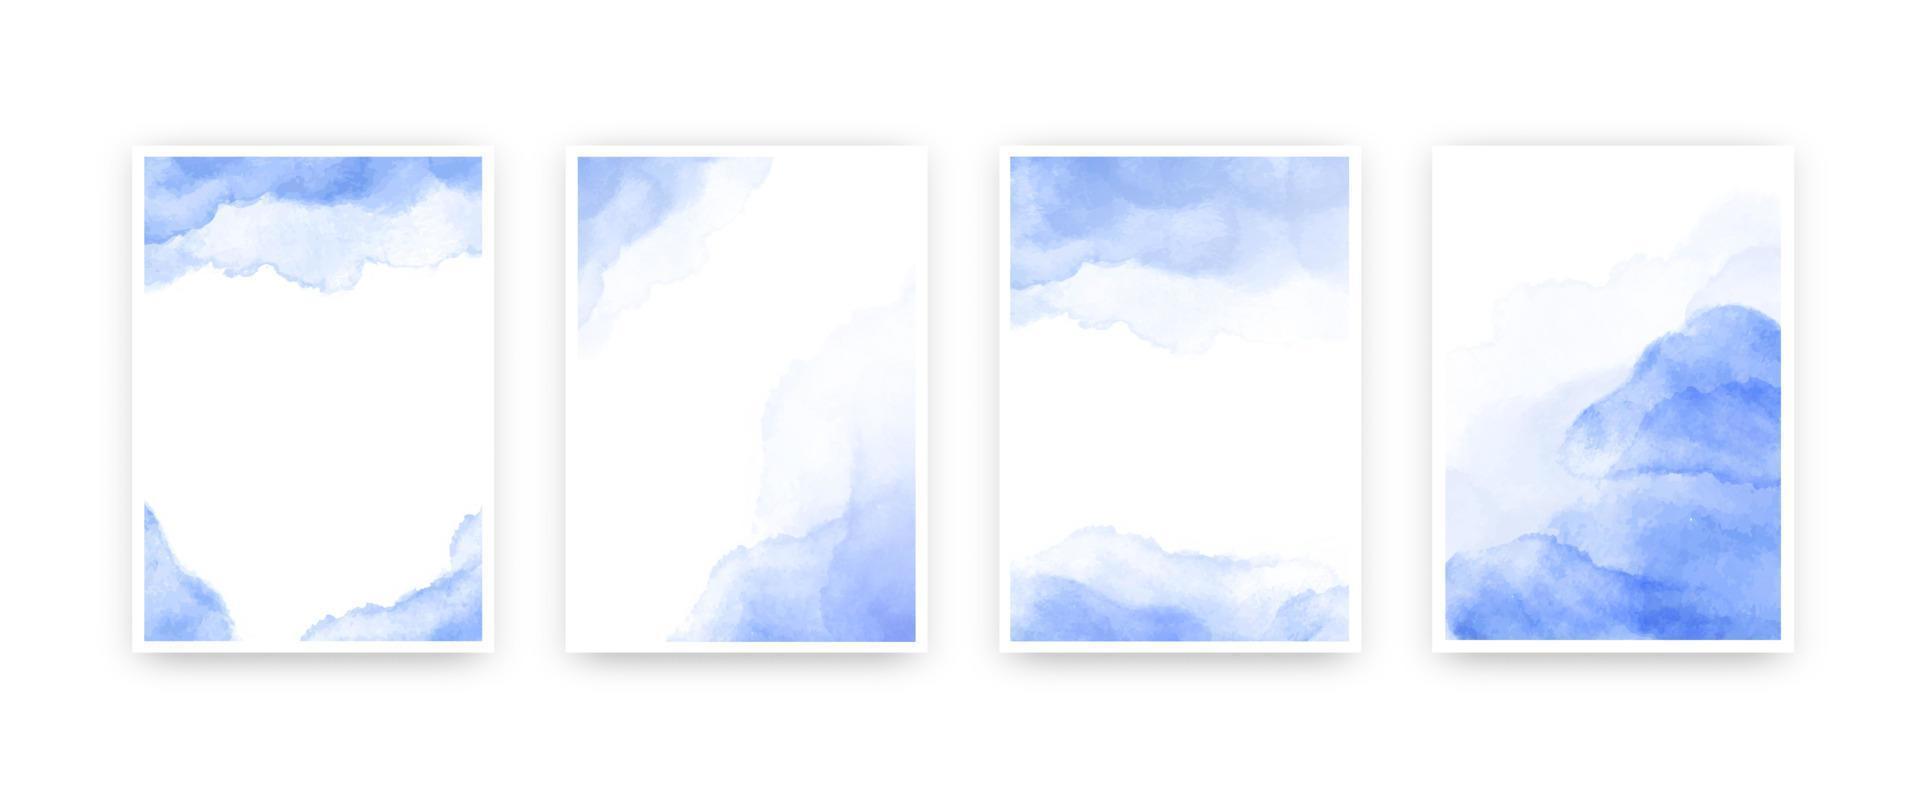 Blue watercolor wet wash splash 5x7 invitation card background template. vector